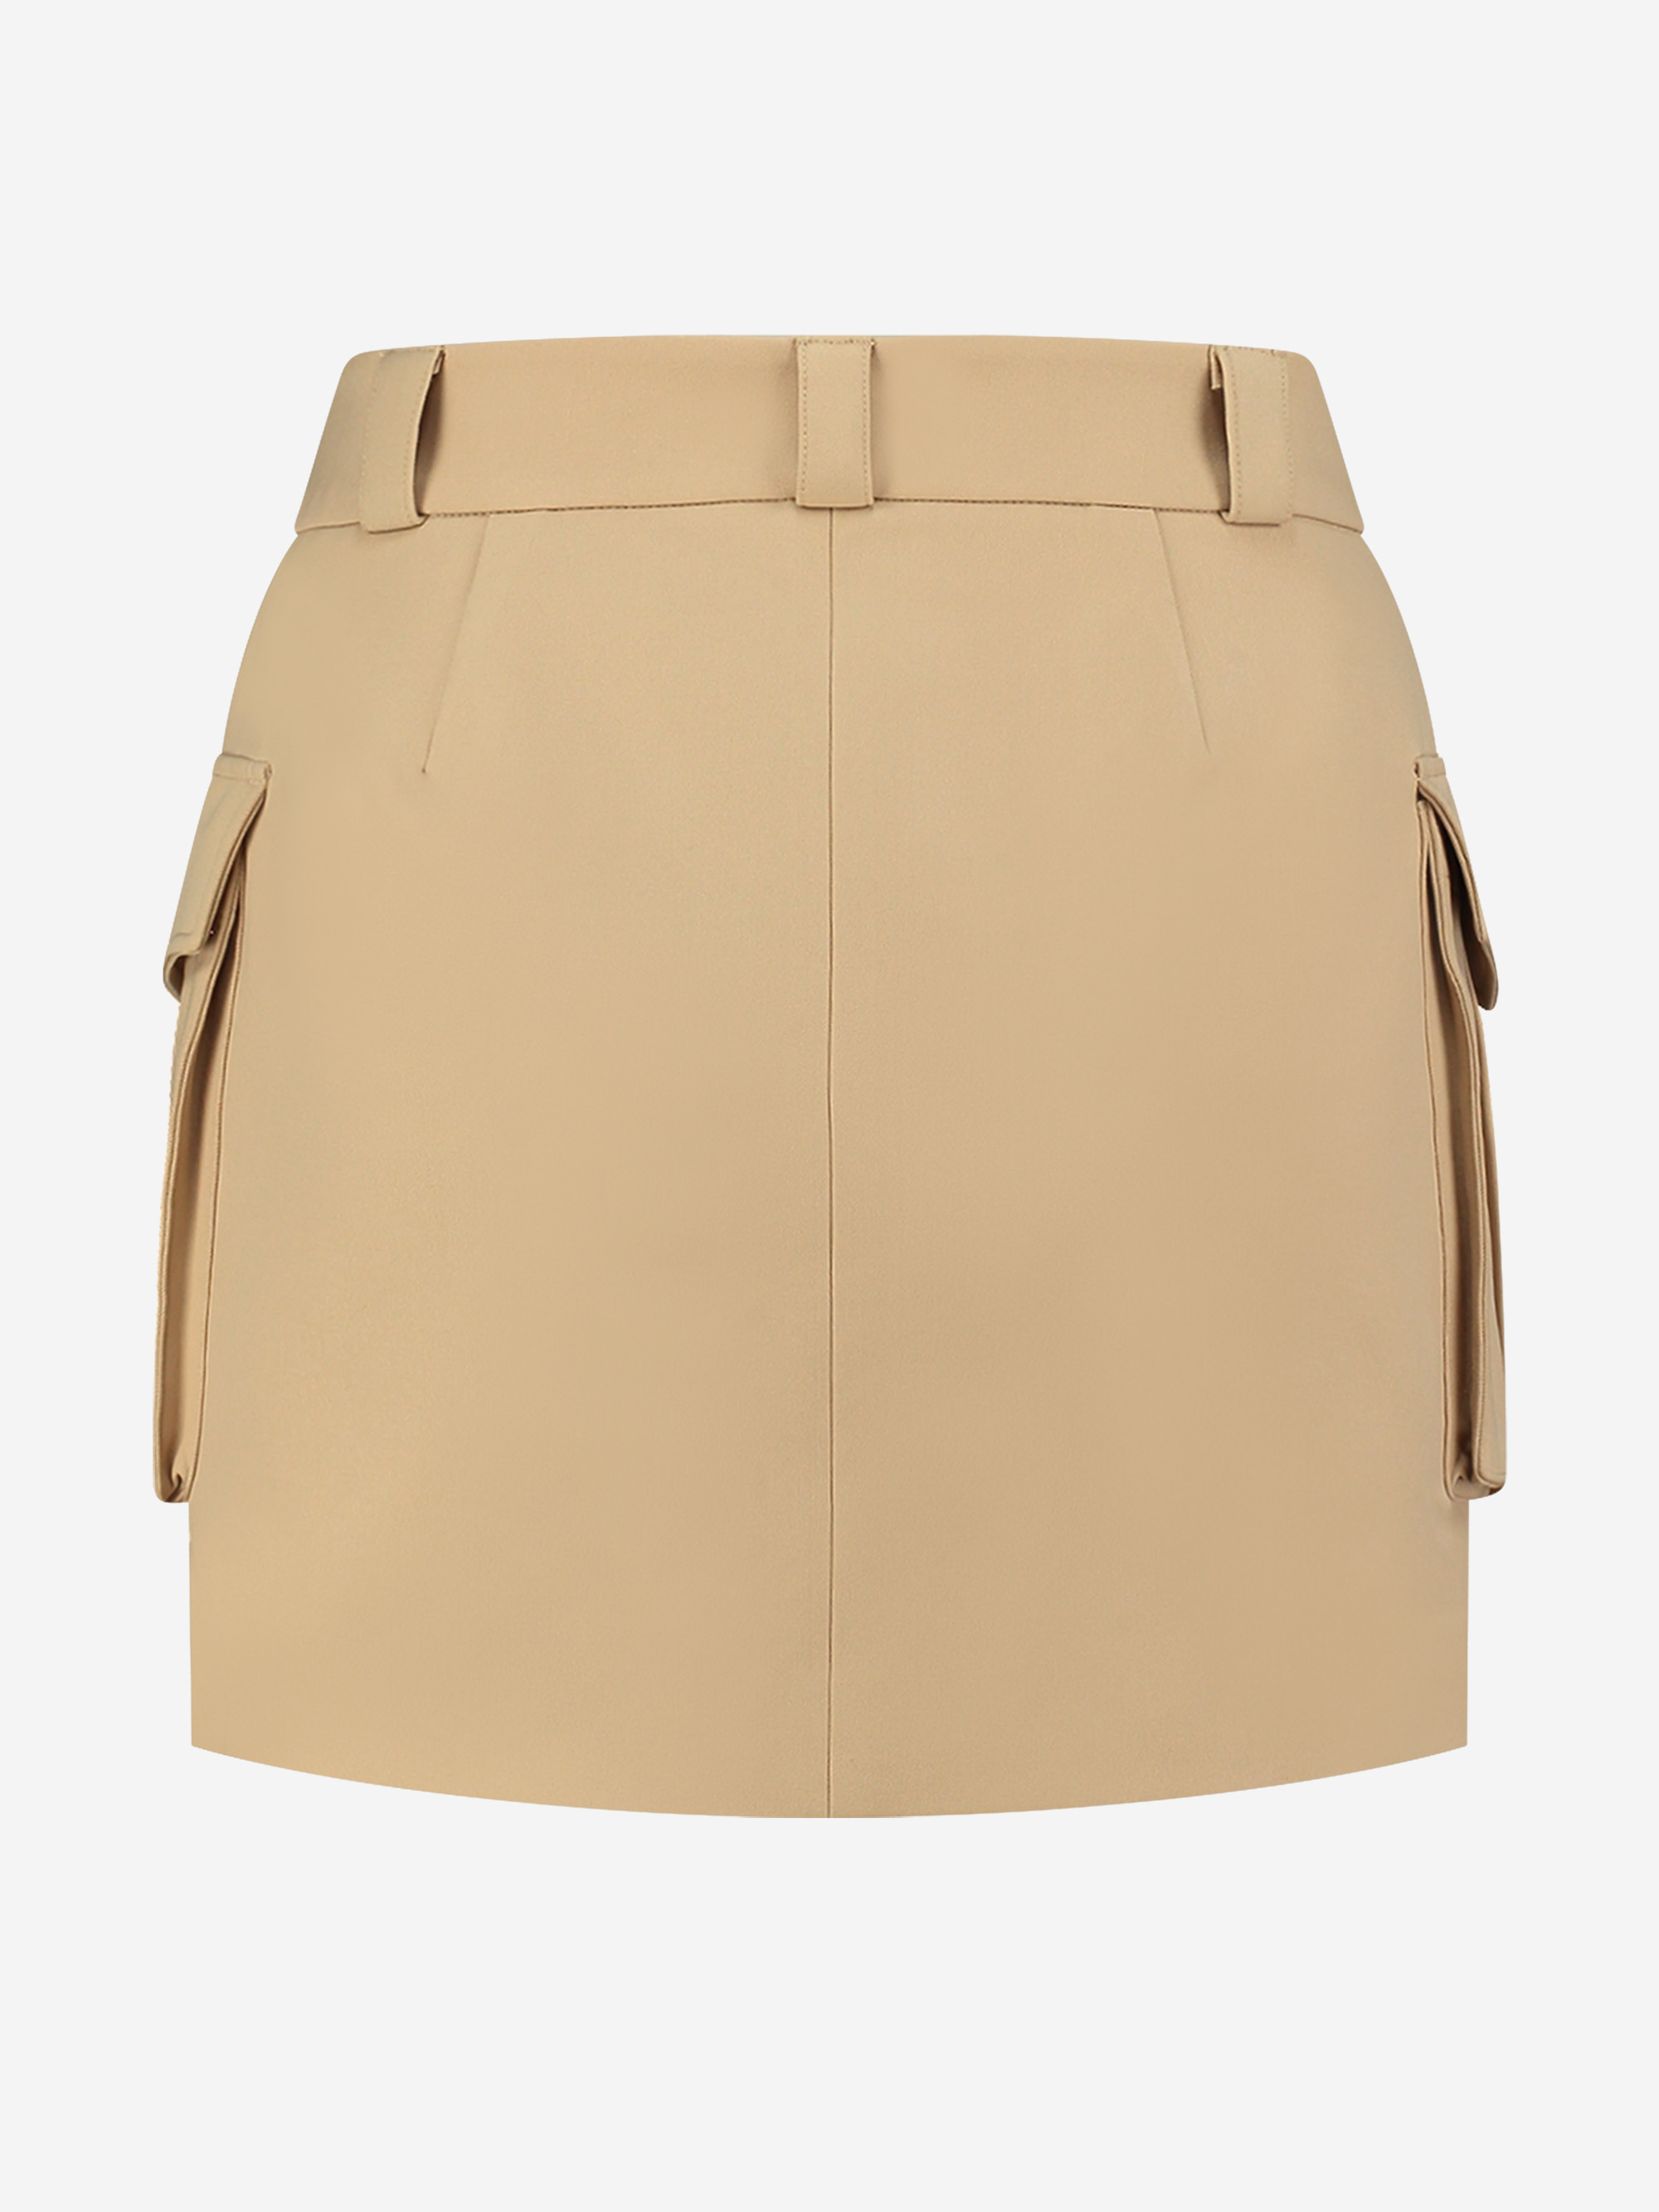 Bel Air Skirt